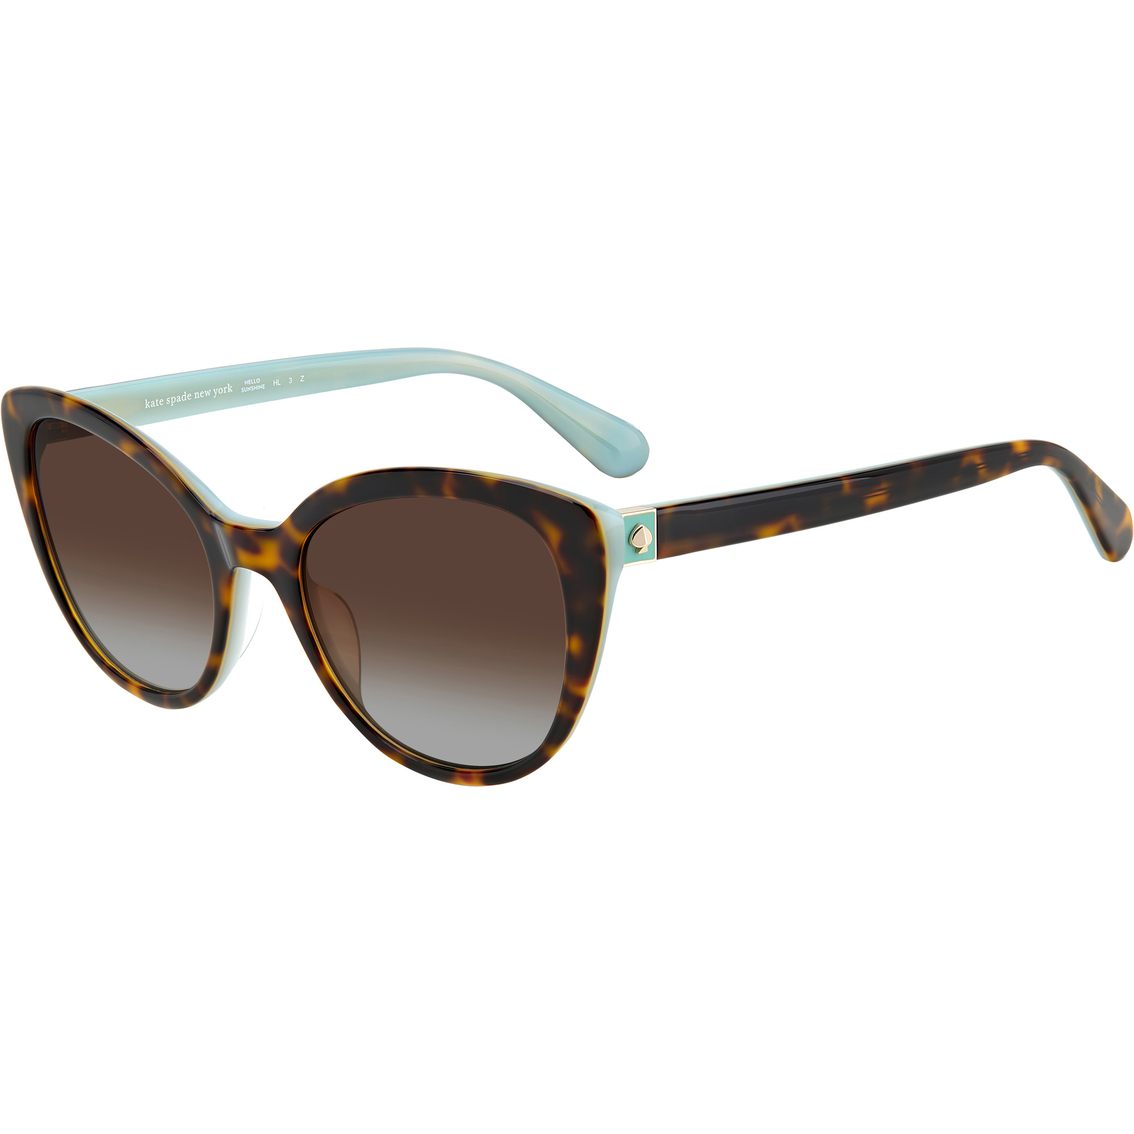 Kate Spade Amberlee Sunglasses 0807wj | Sunglasses | Clothing ...